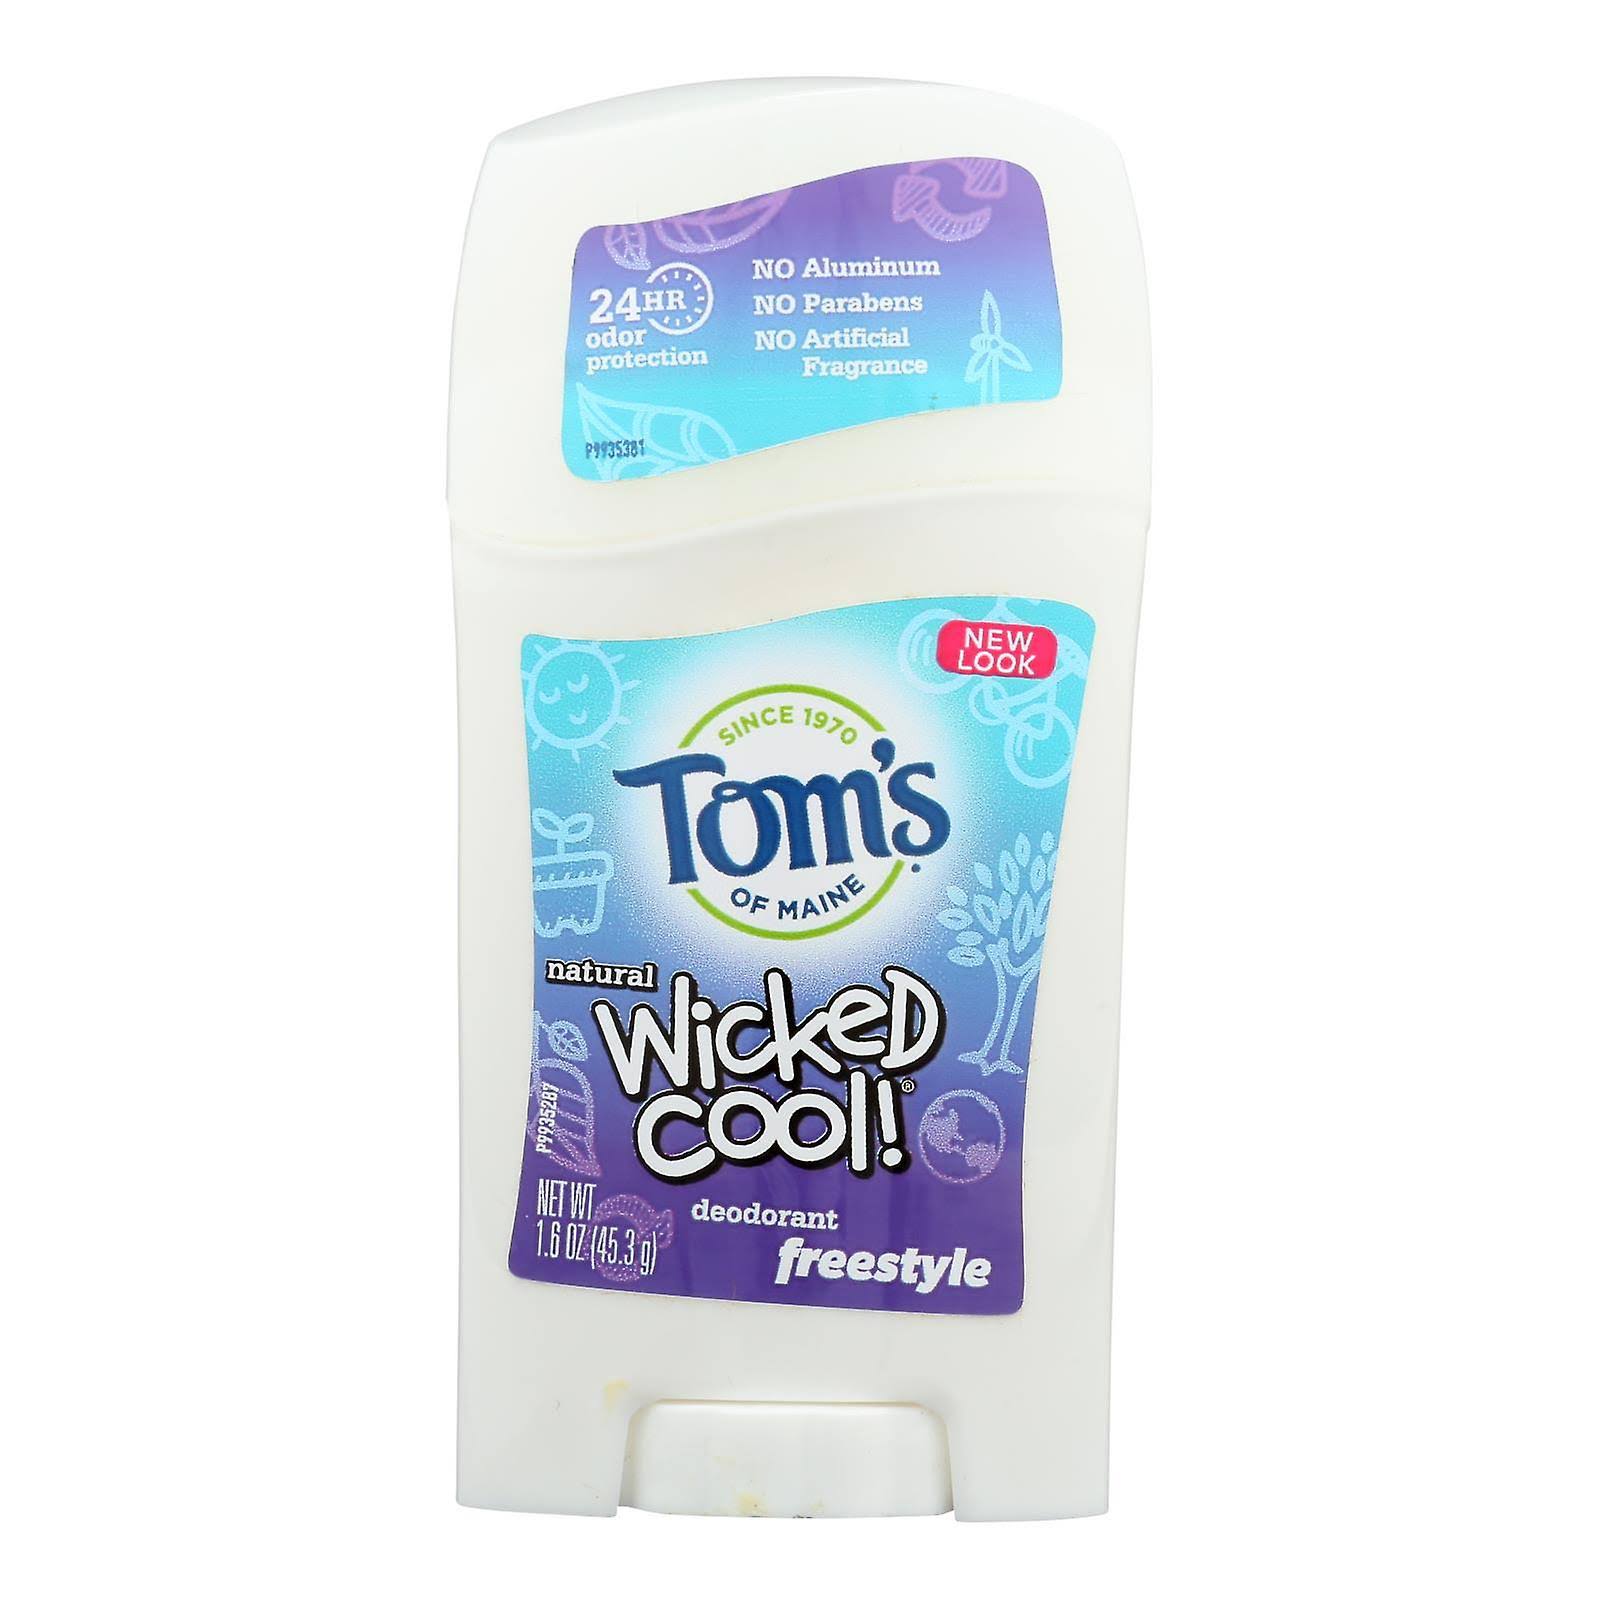 Tom's of Maine Wicked Cool Deodorant - Freestyle - 1.6 oz